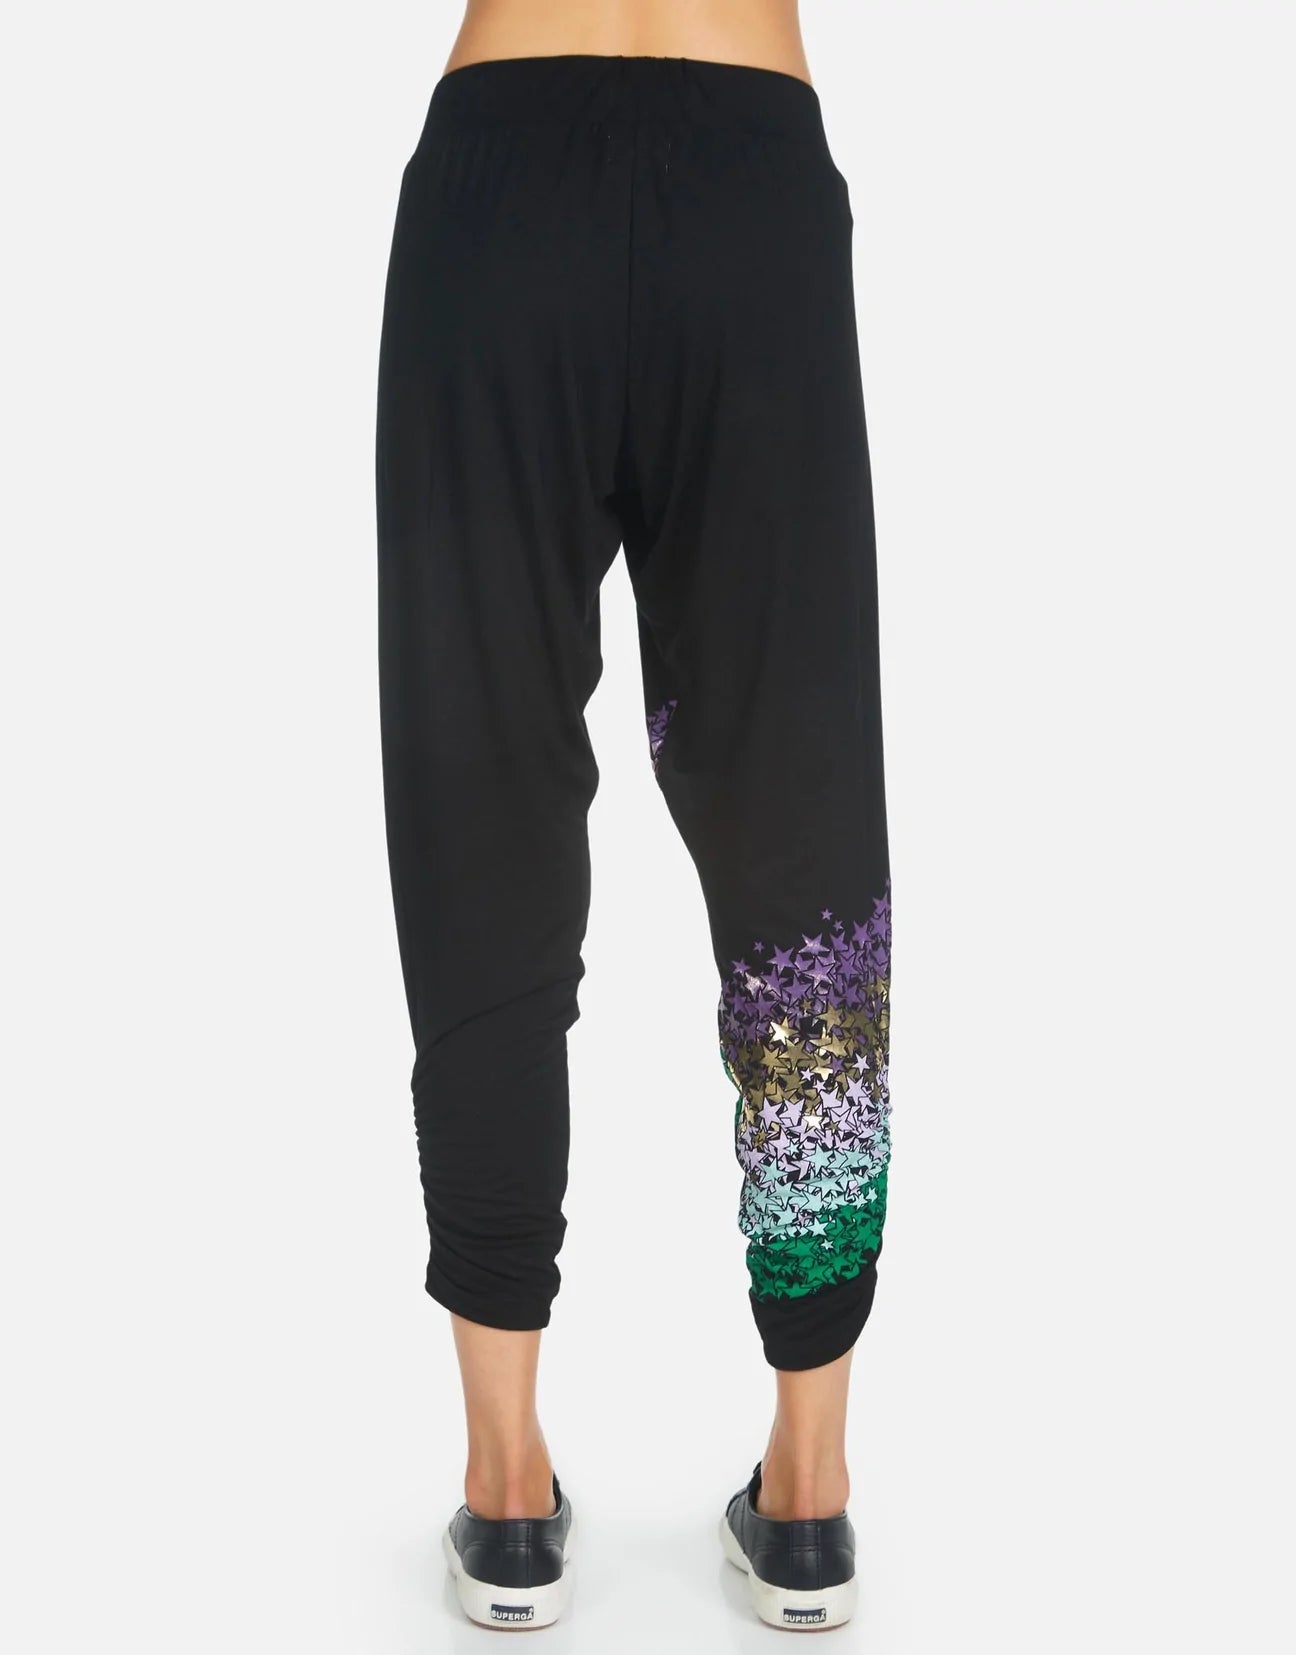 Shop Lauren Moshi Mimi Star Confetti Sweatpants - Premium Sweatpants from Lauren Moshi Online now at Spoiled Brat 